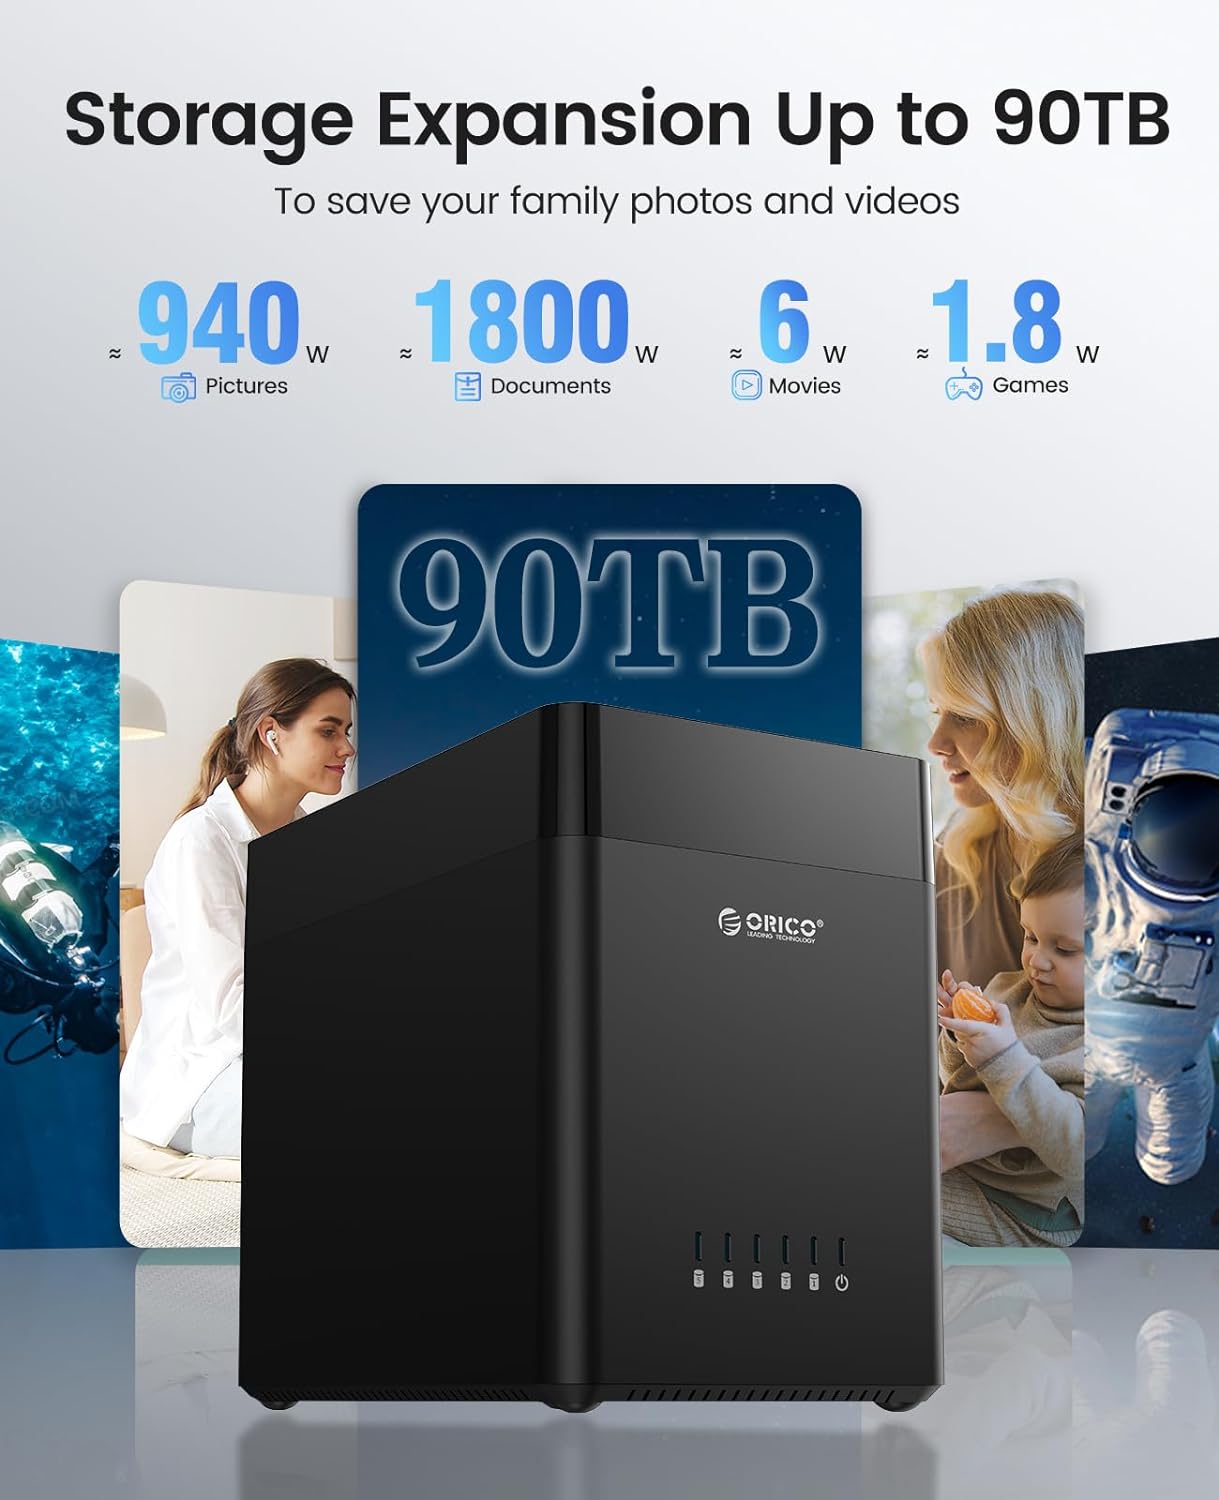 ORICO 5 Bay 3.5 Inch Hard Drive Enclosure USB C to SATA - $90